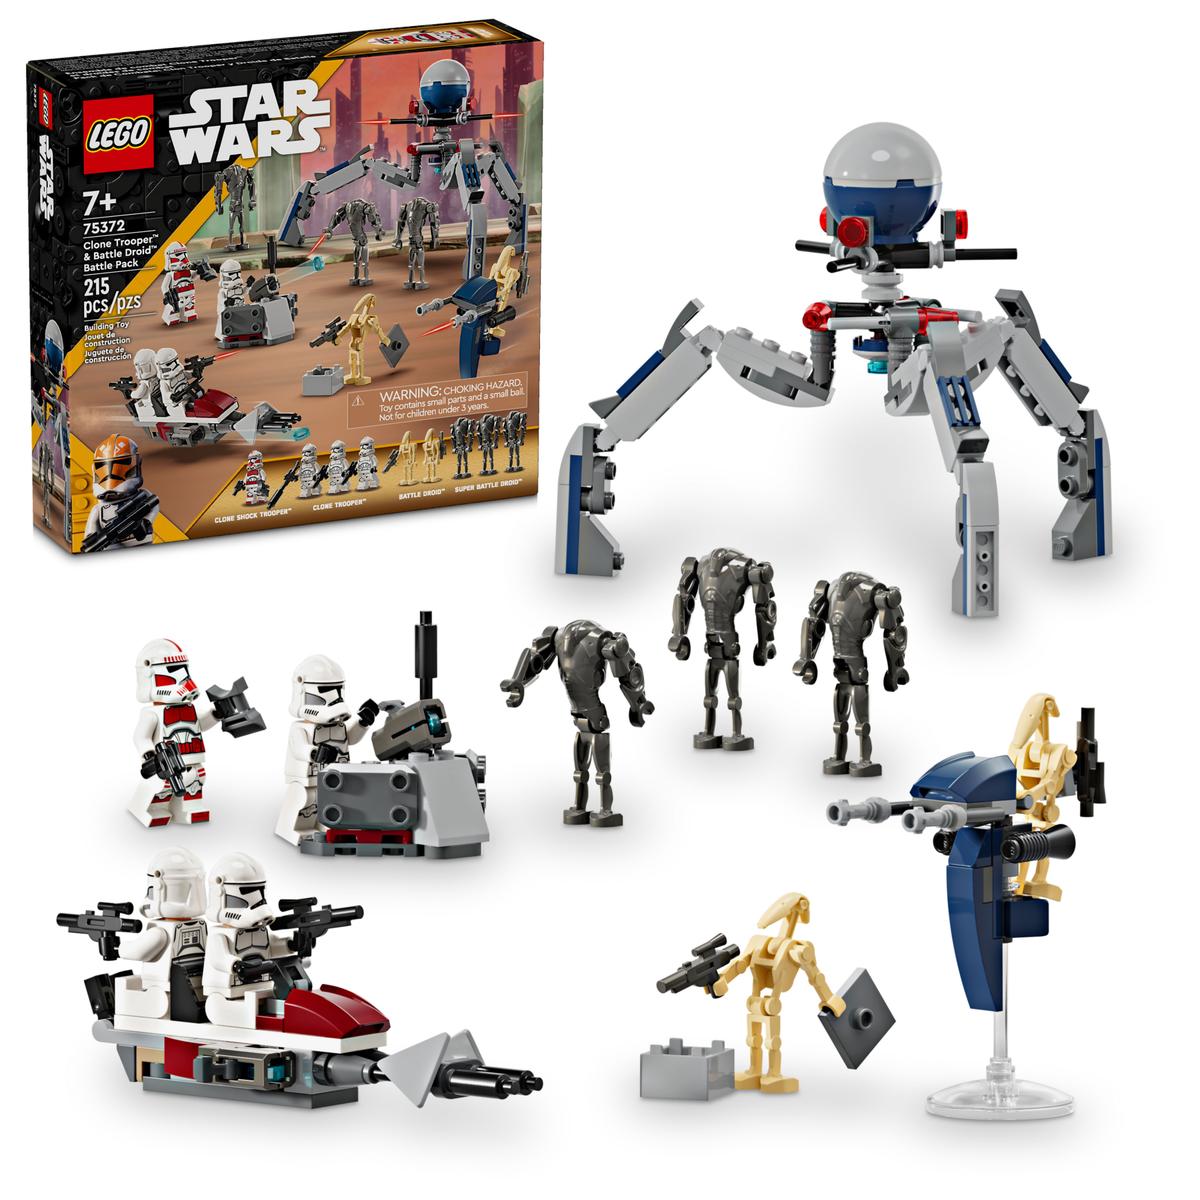 Lego Star Wars 75372 - Clone Trooper & Battle Droid Battle Pack